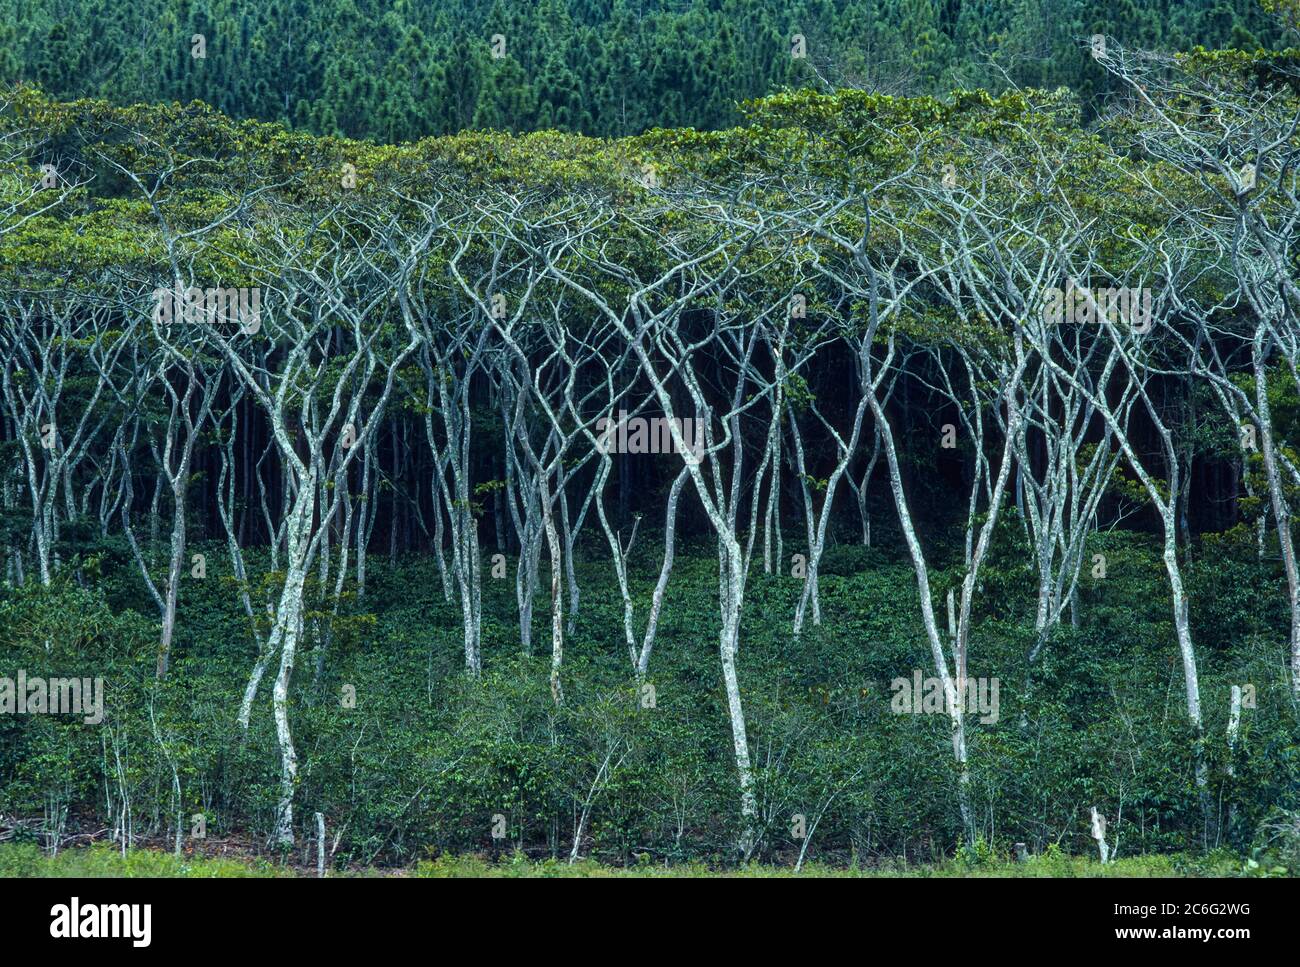 TACHIRA STATE, VENEZUELA - Coffee bushes growing under shade trees. Stock Photo